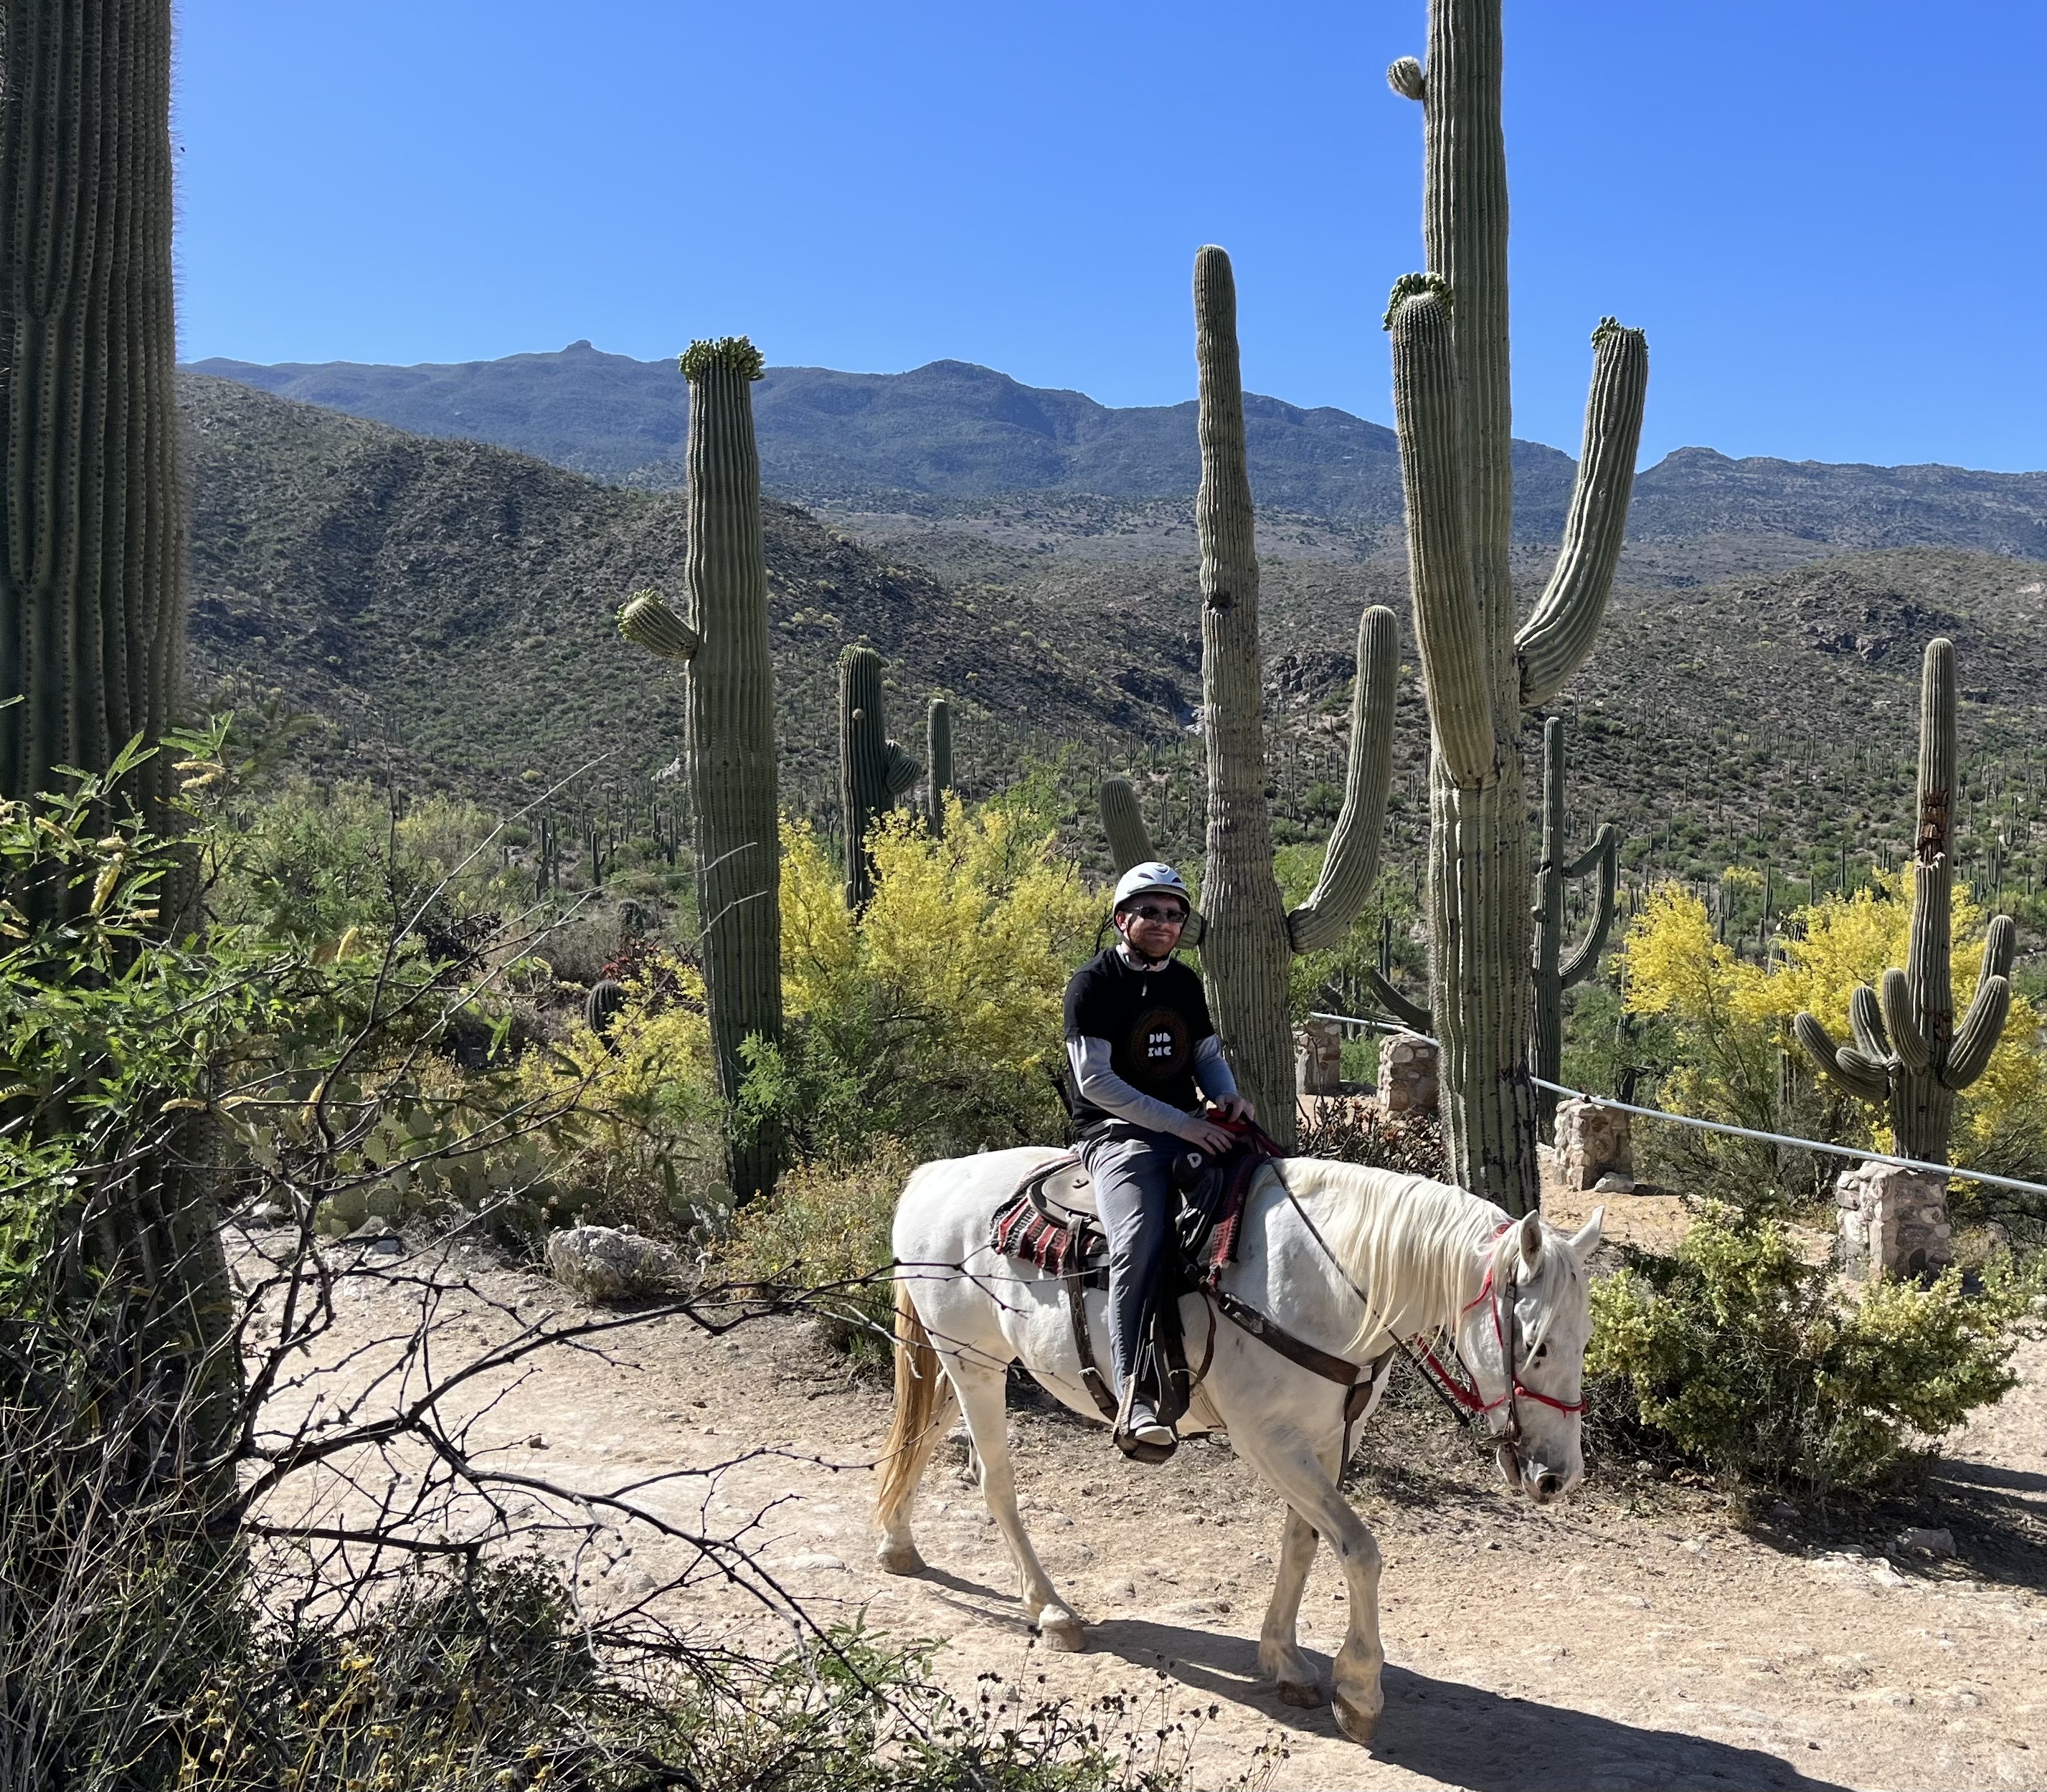 Lukas_on_horse_Tucson